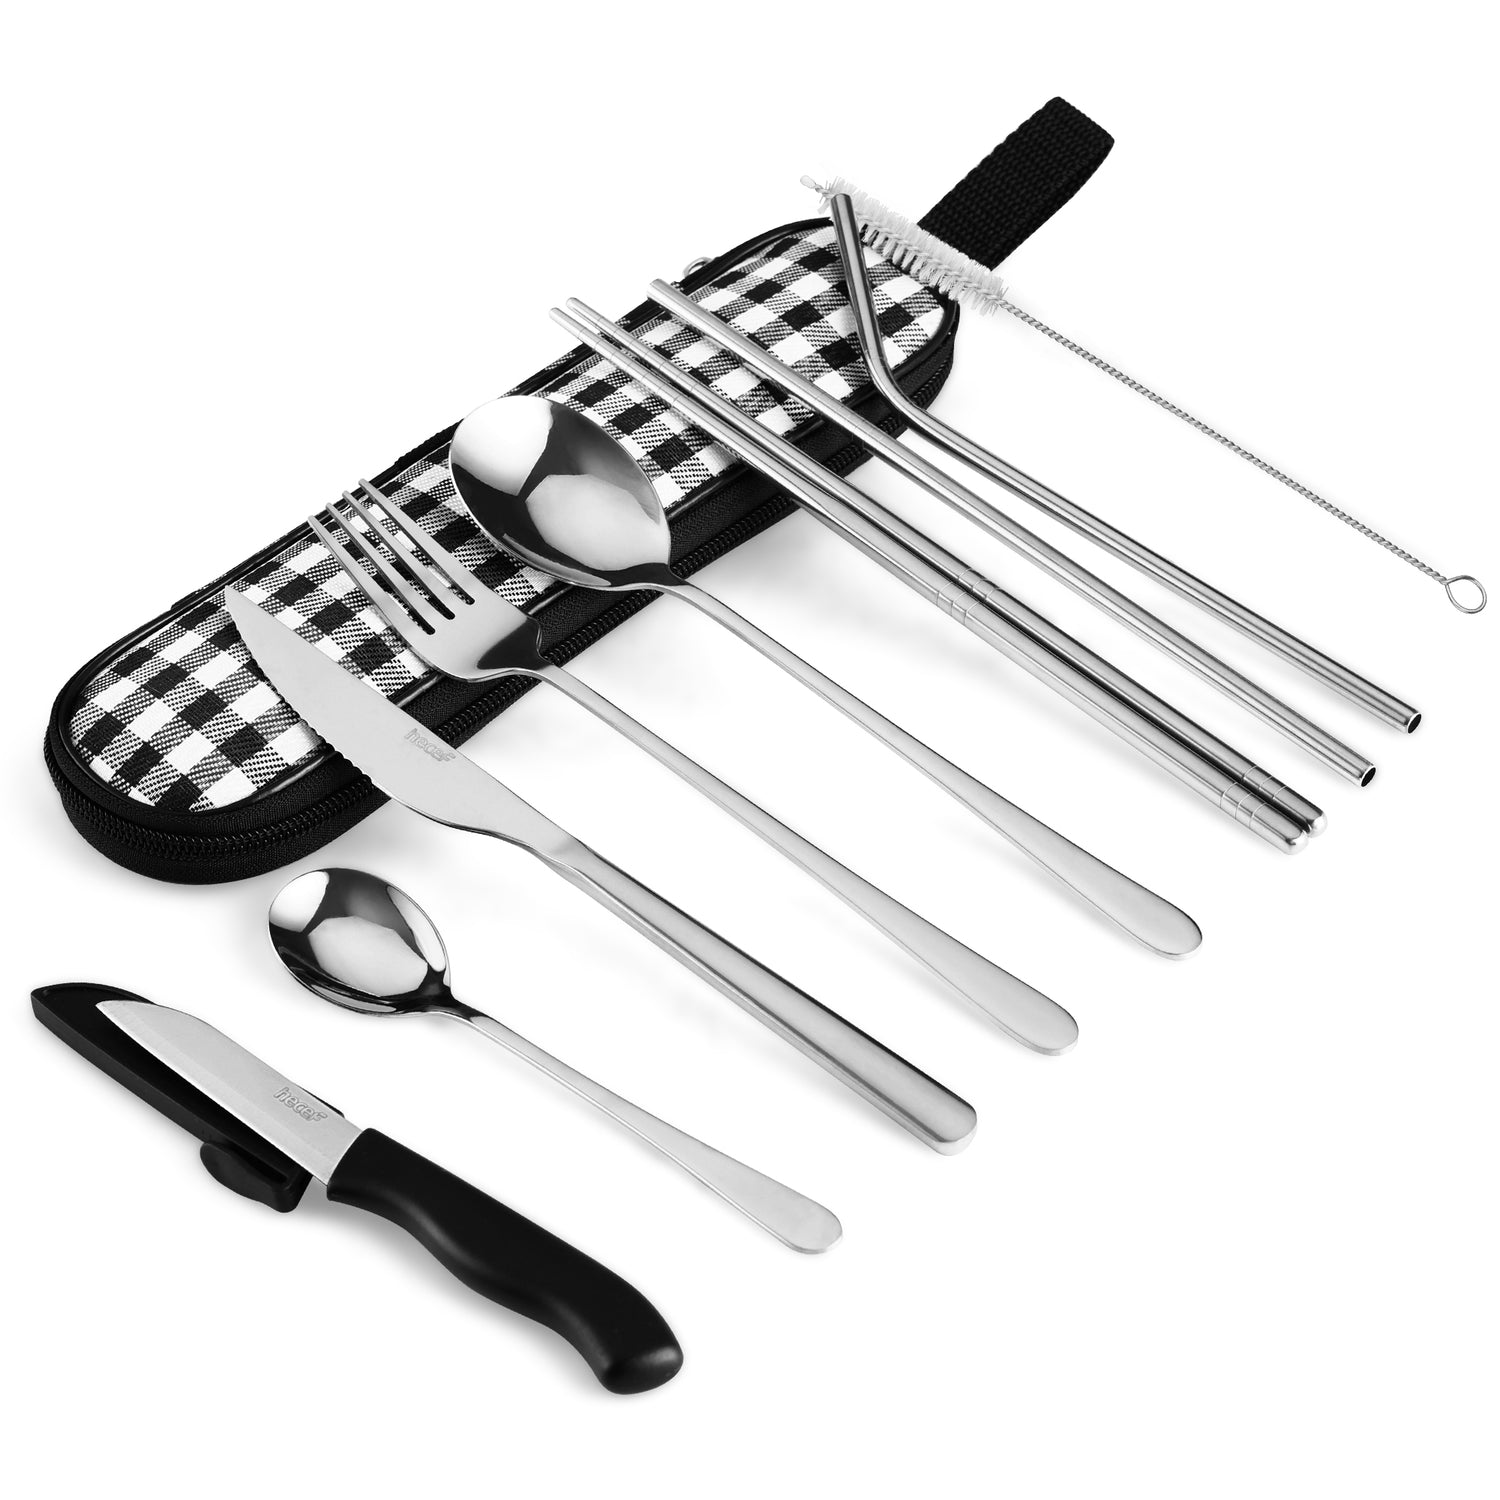 Hecef 11 Pcs Titanium Utensils Portable Reusable Travel Camp Cutlery Set Flatware Silverware Set, Black